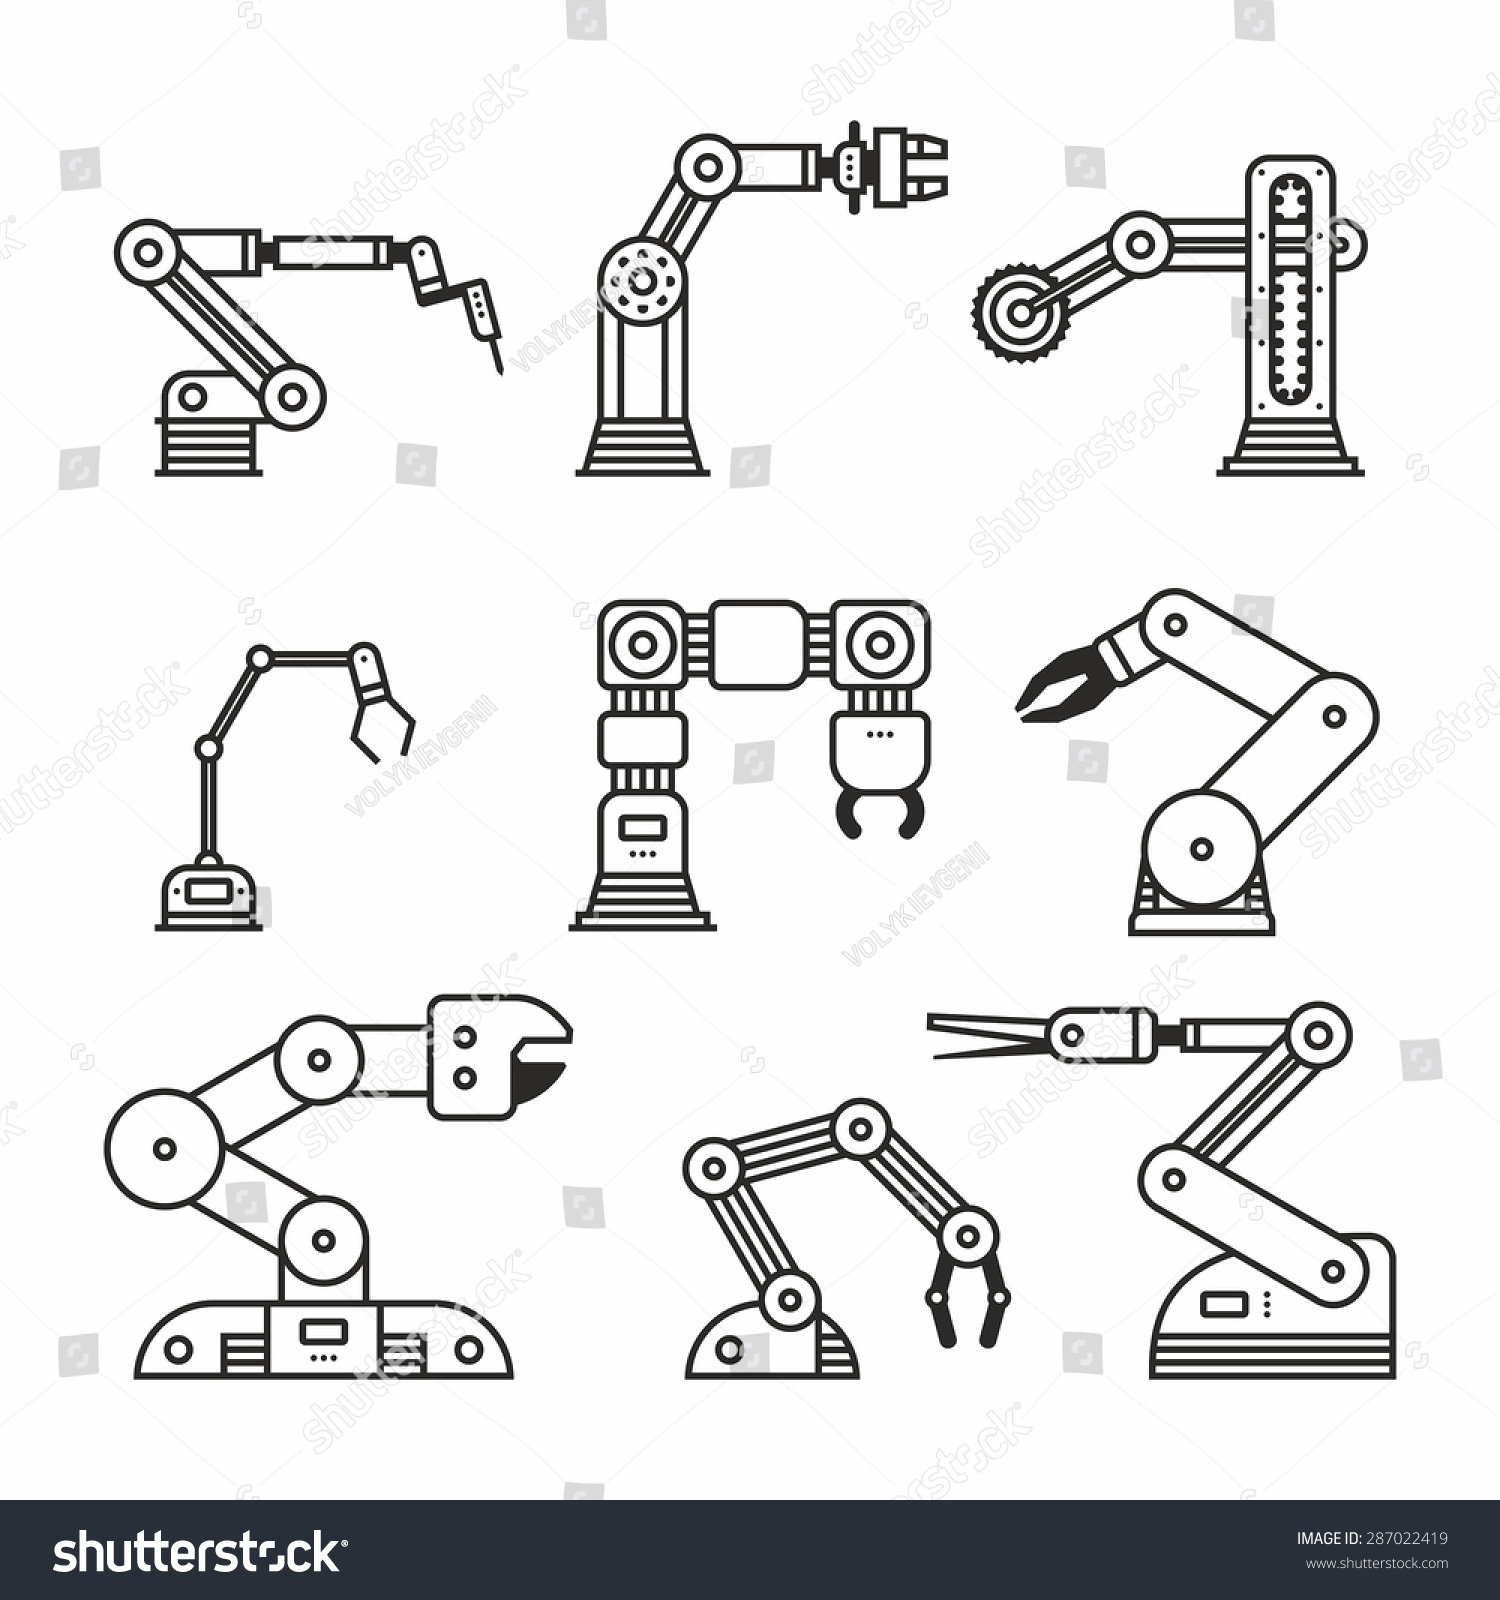 Industrial robot arm - Royalty Free Stock Vector 287022419 - Avopix.com